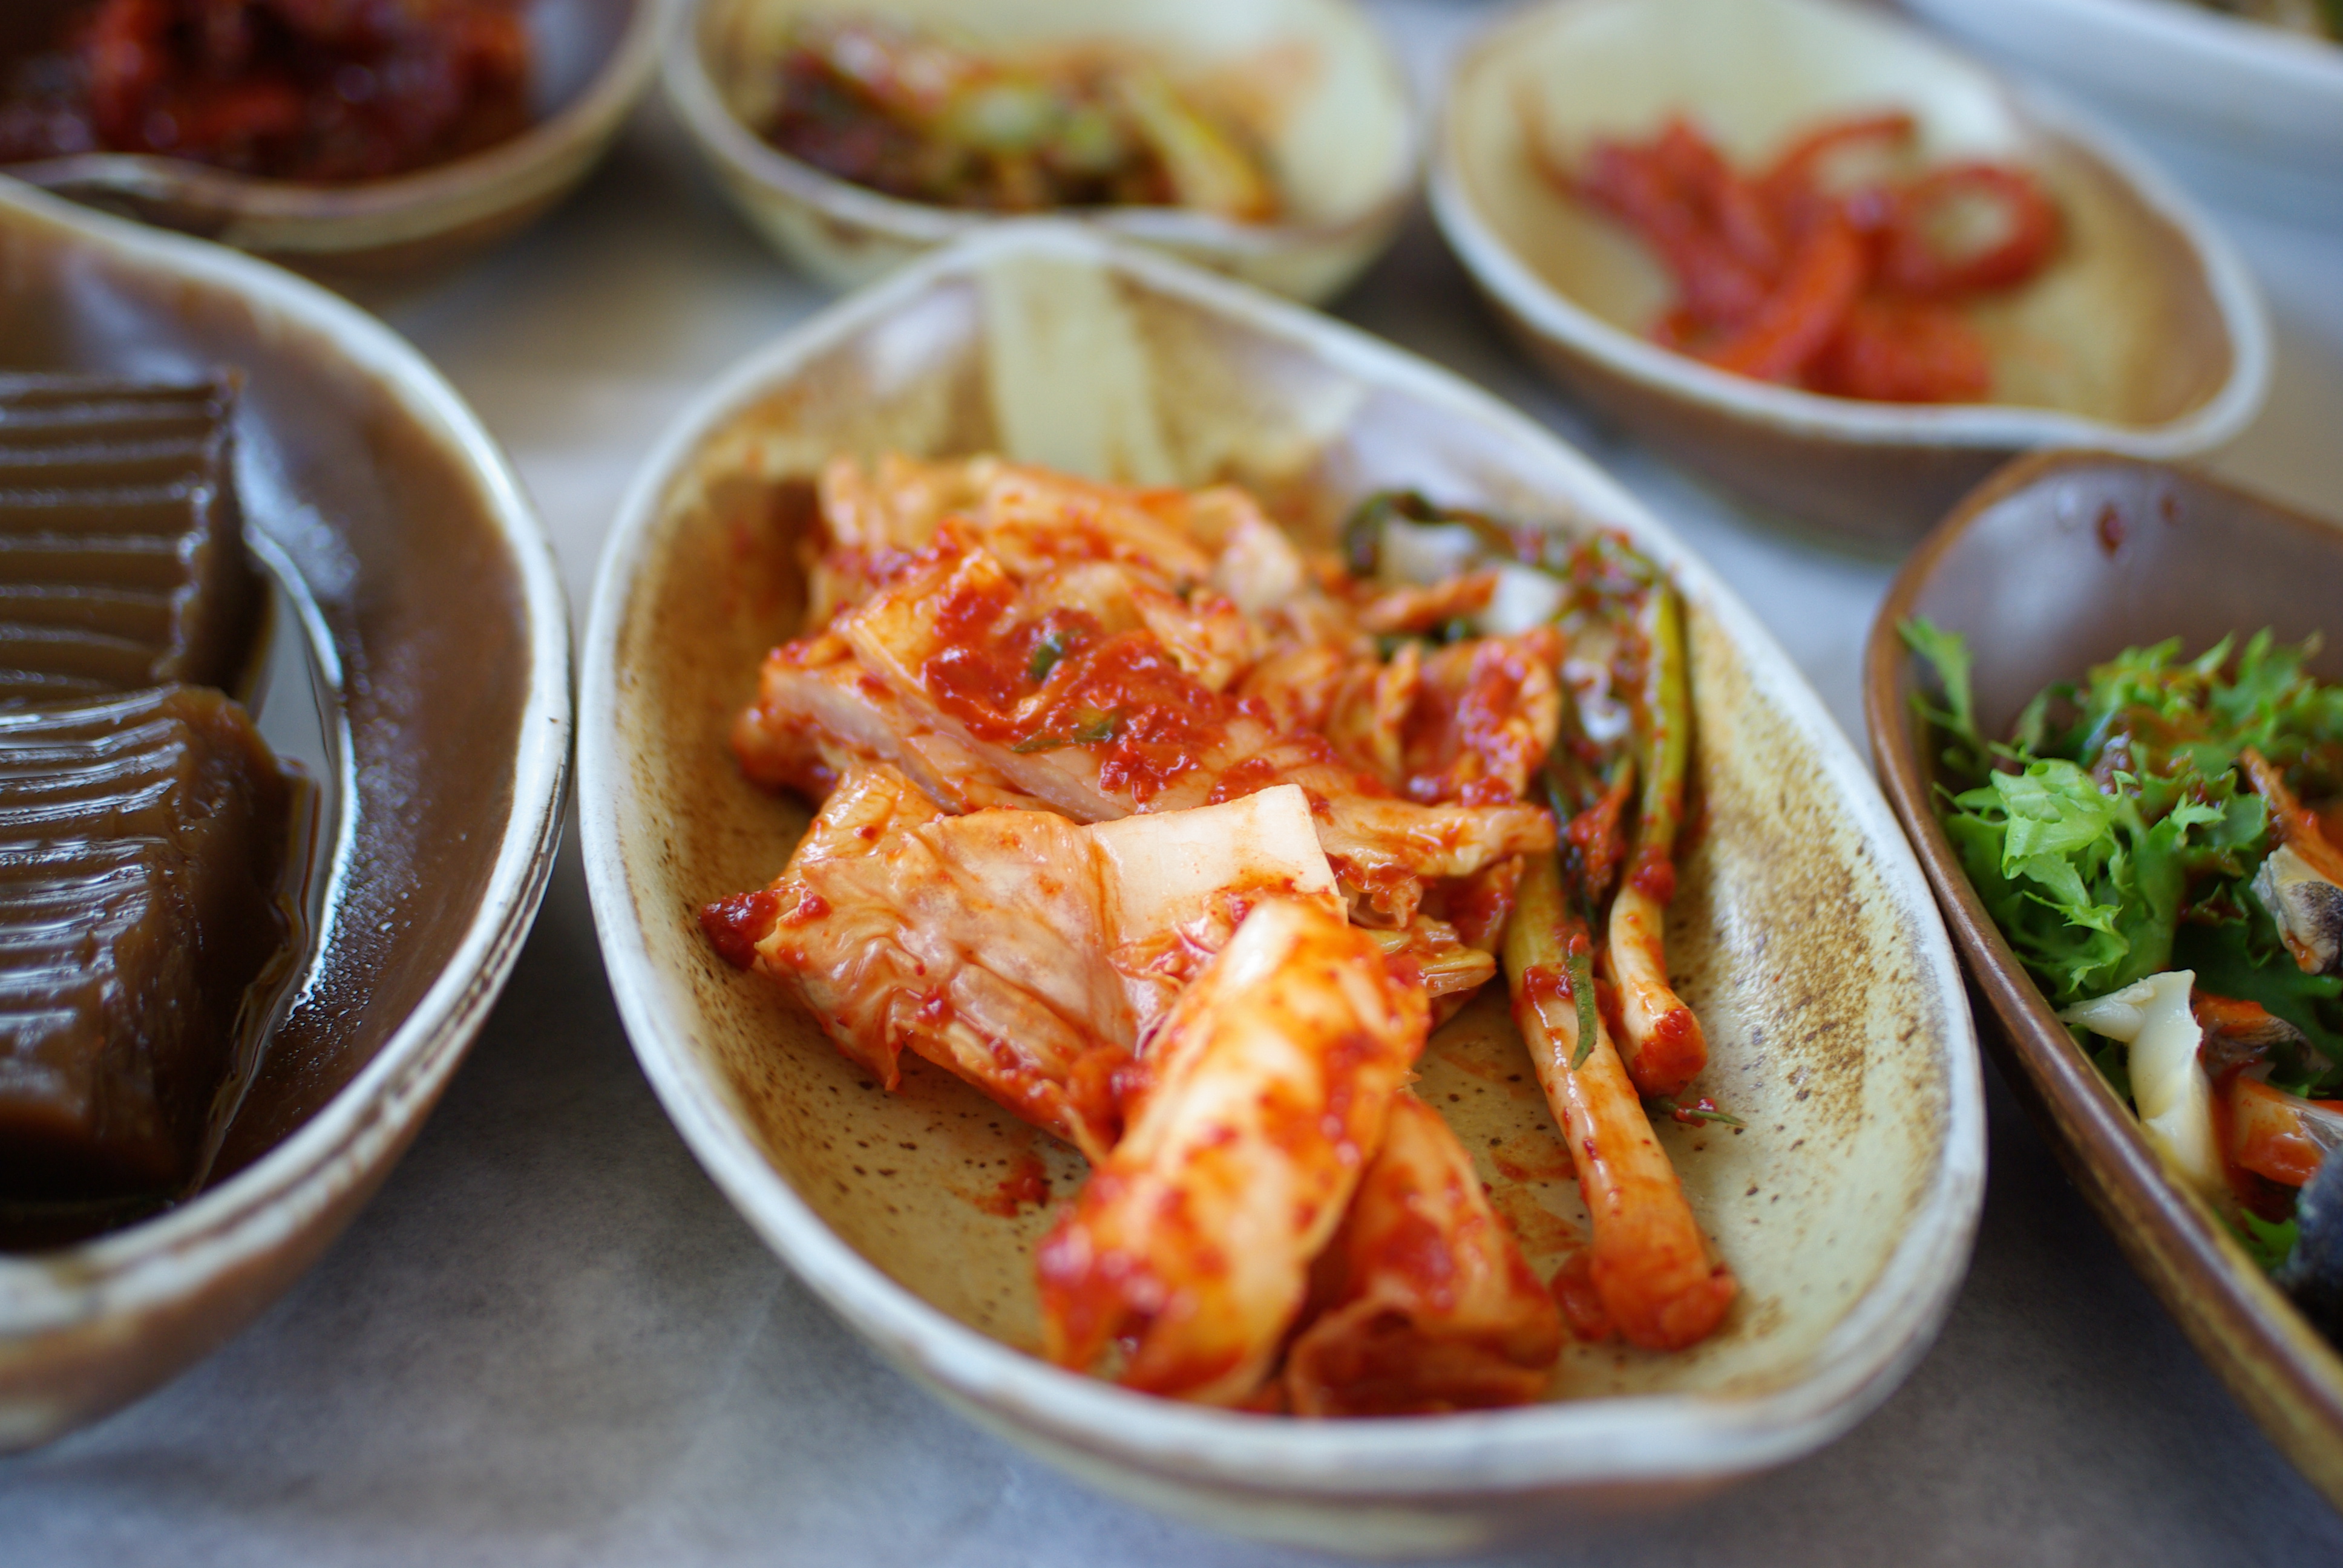 Kimchi загородный. Национальное блюдо Кореи кимчхи. Южная Корея кимчи. Национальные блюда Кореи с кимчи. Южная Корея кухня кимчи.